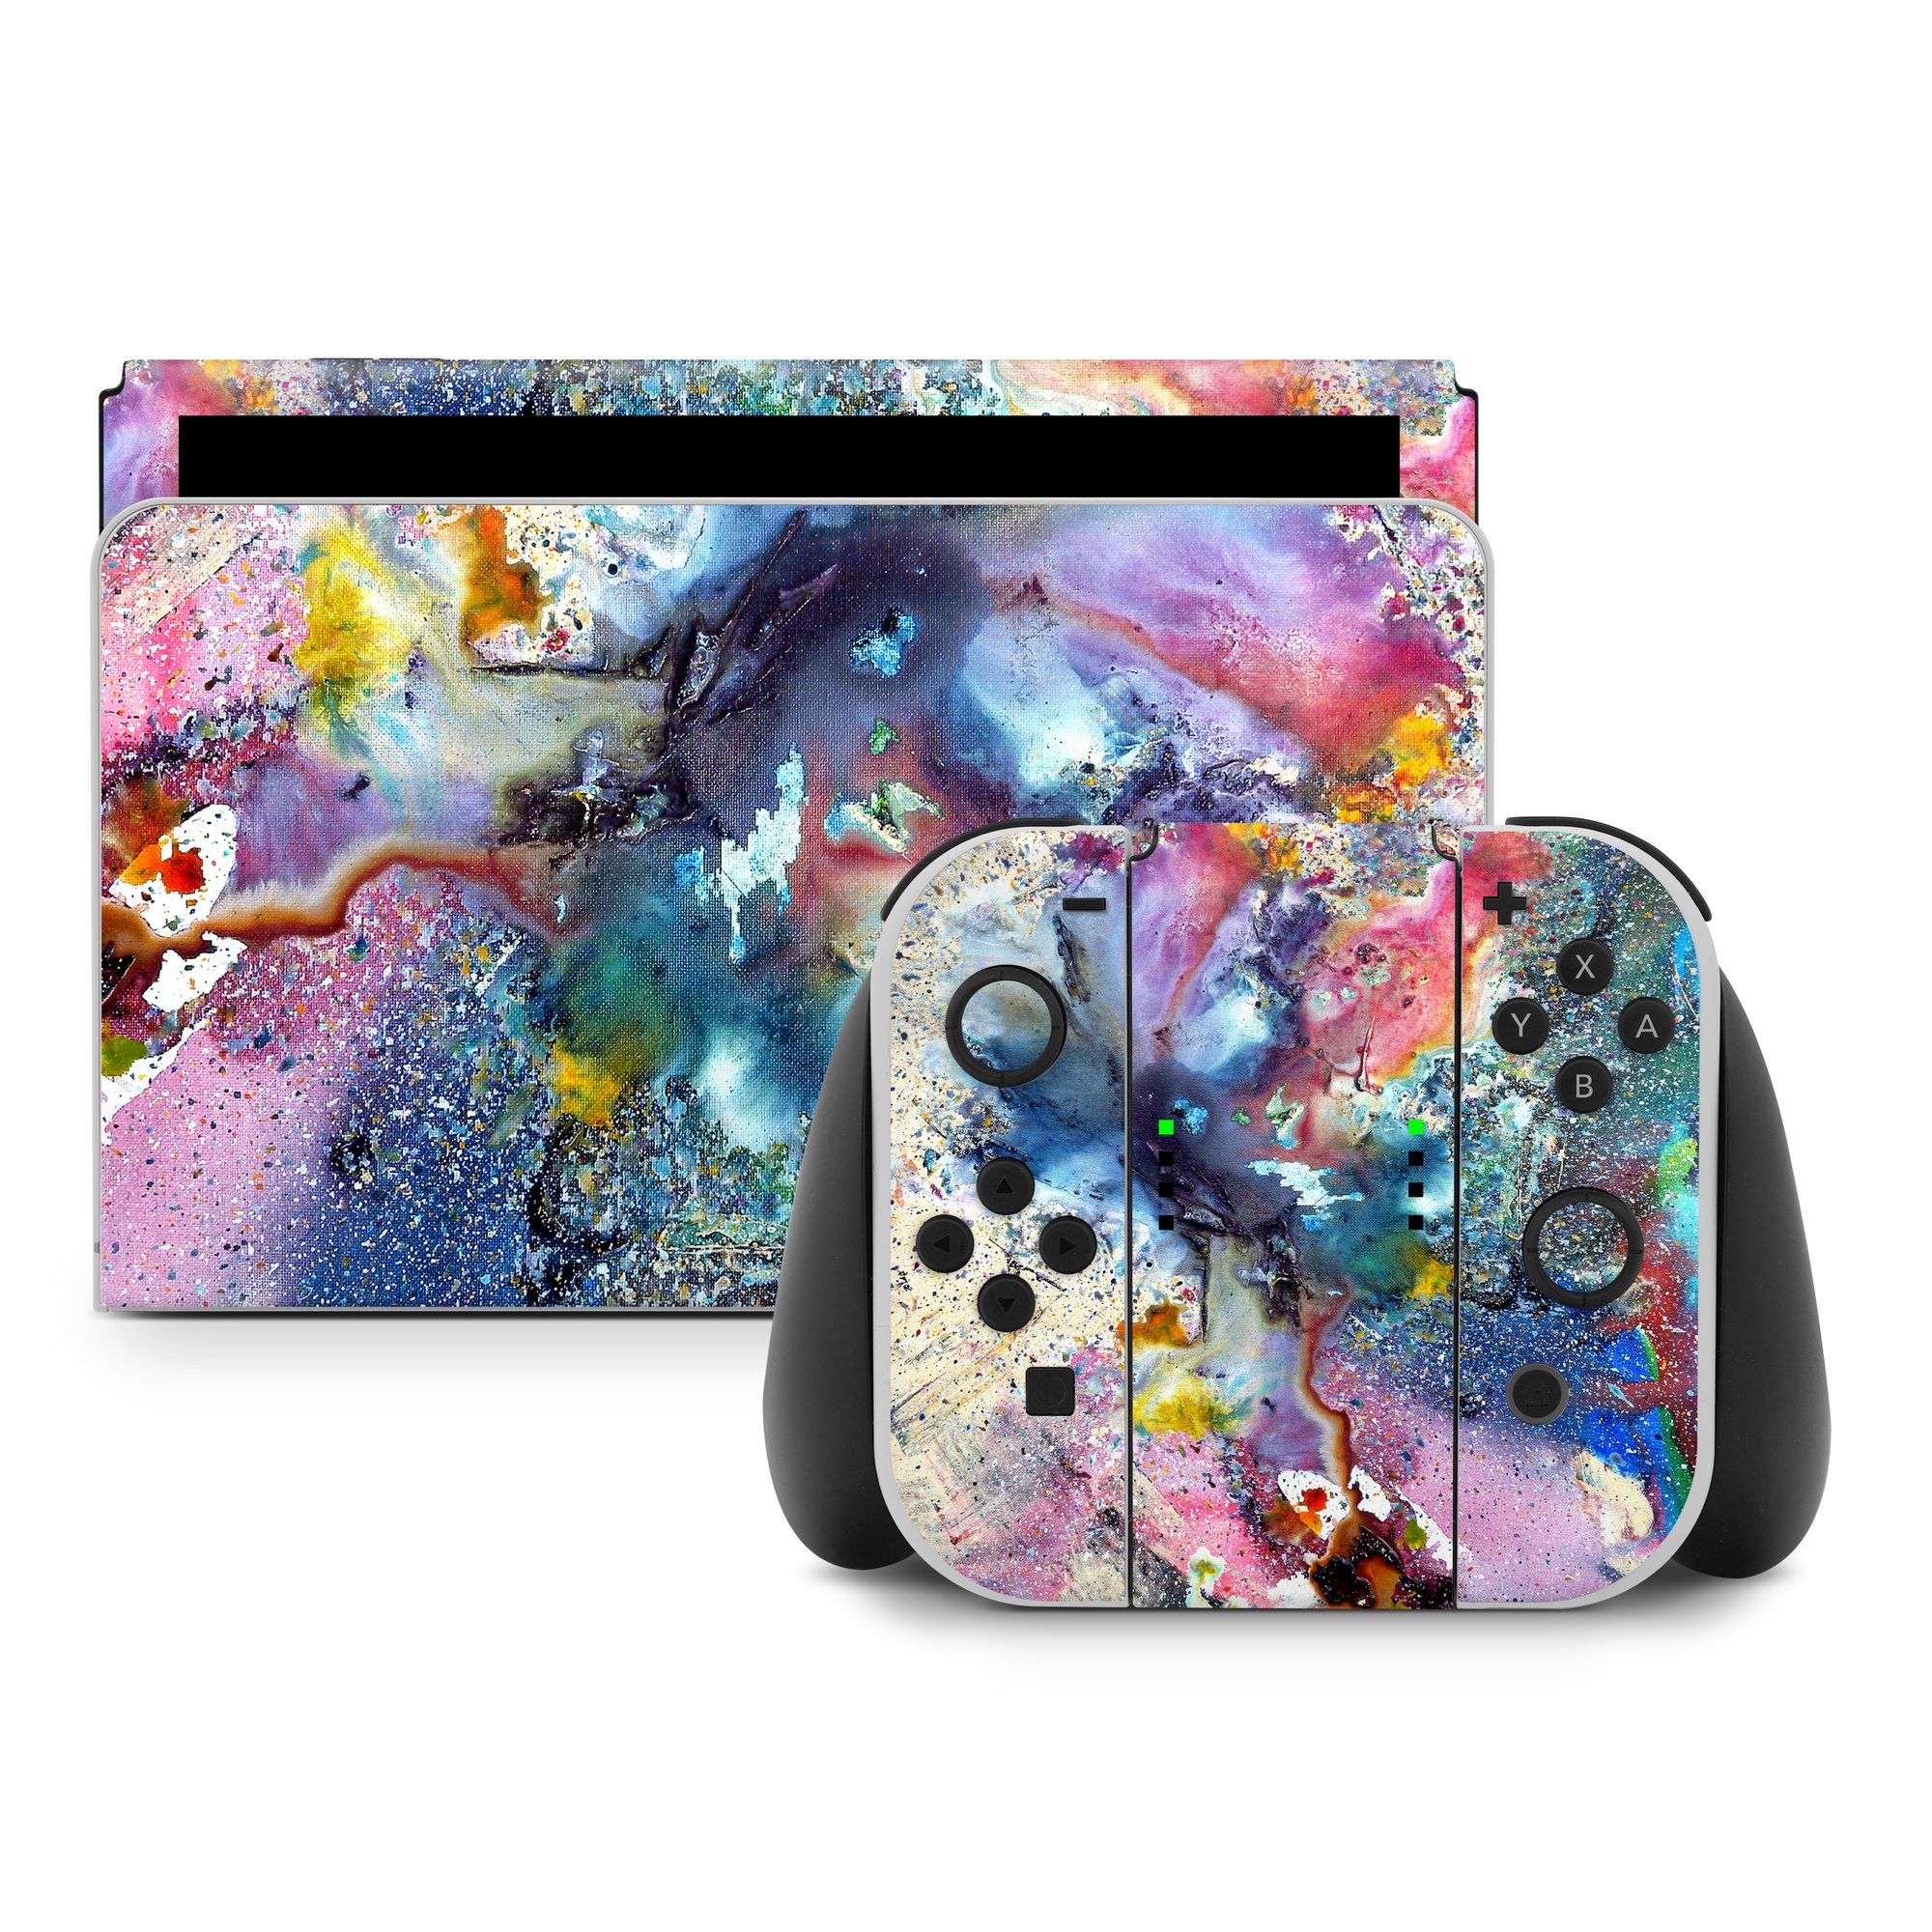 Nintendo Switch Skin - Cosmic Flower (Image 1)